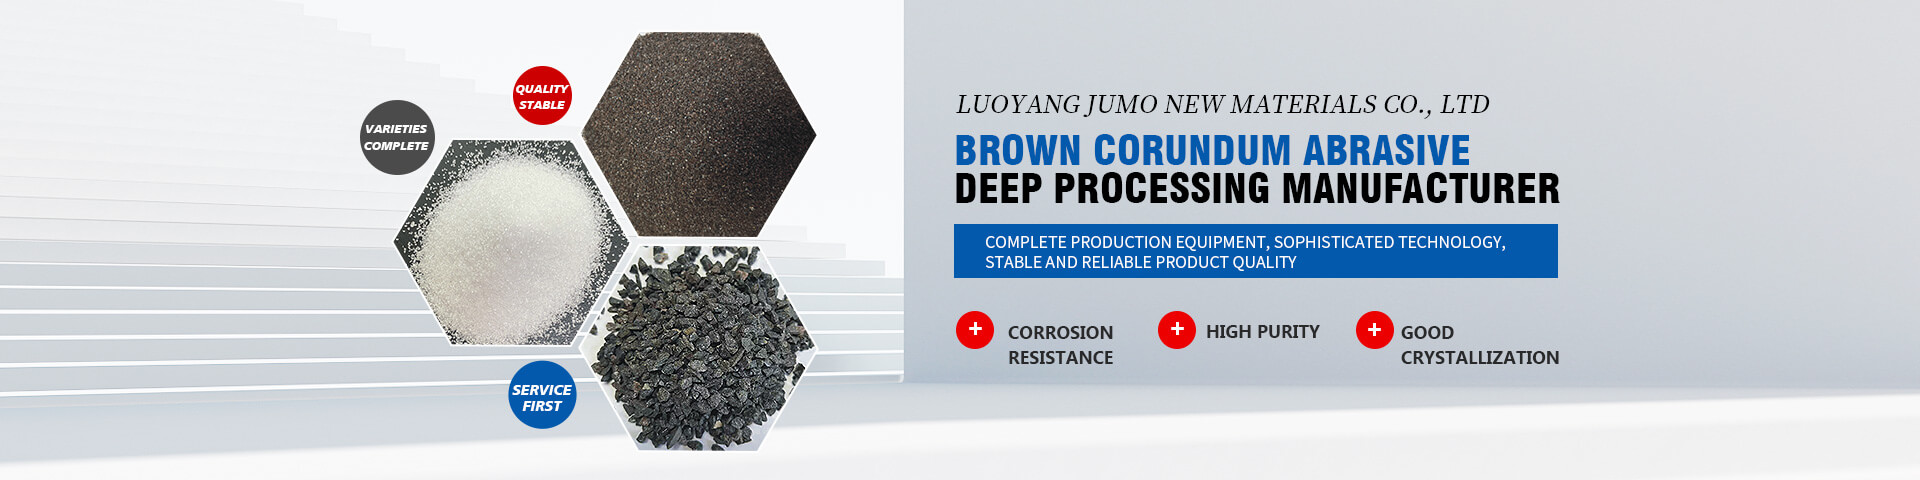 Luoyang Jumo New Materials Co., Ltd